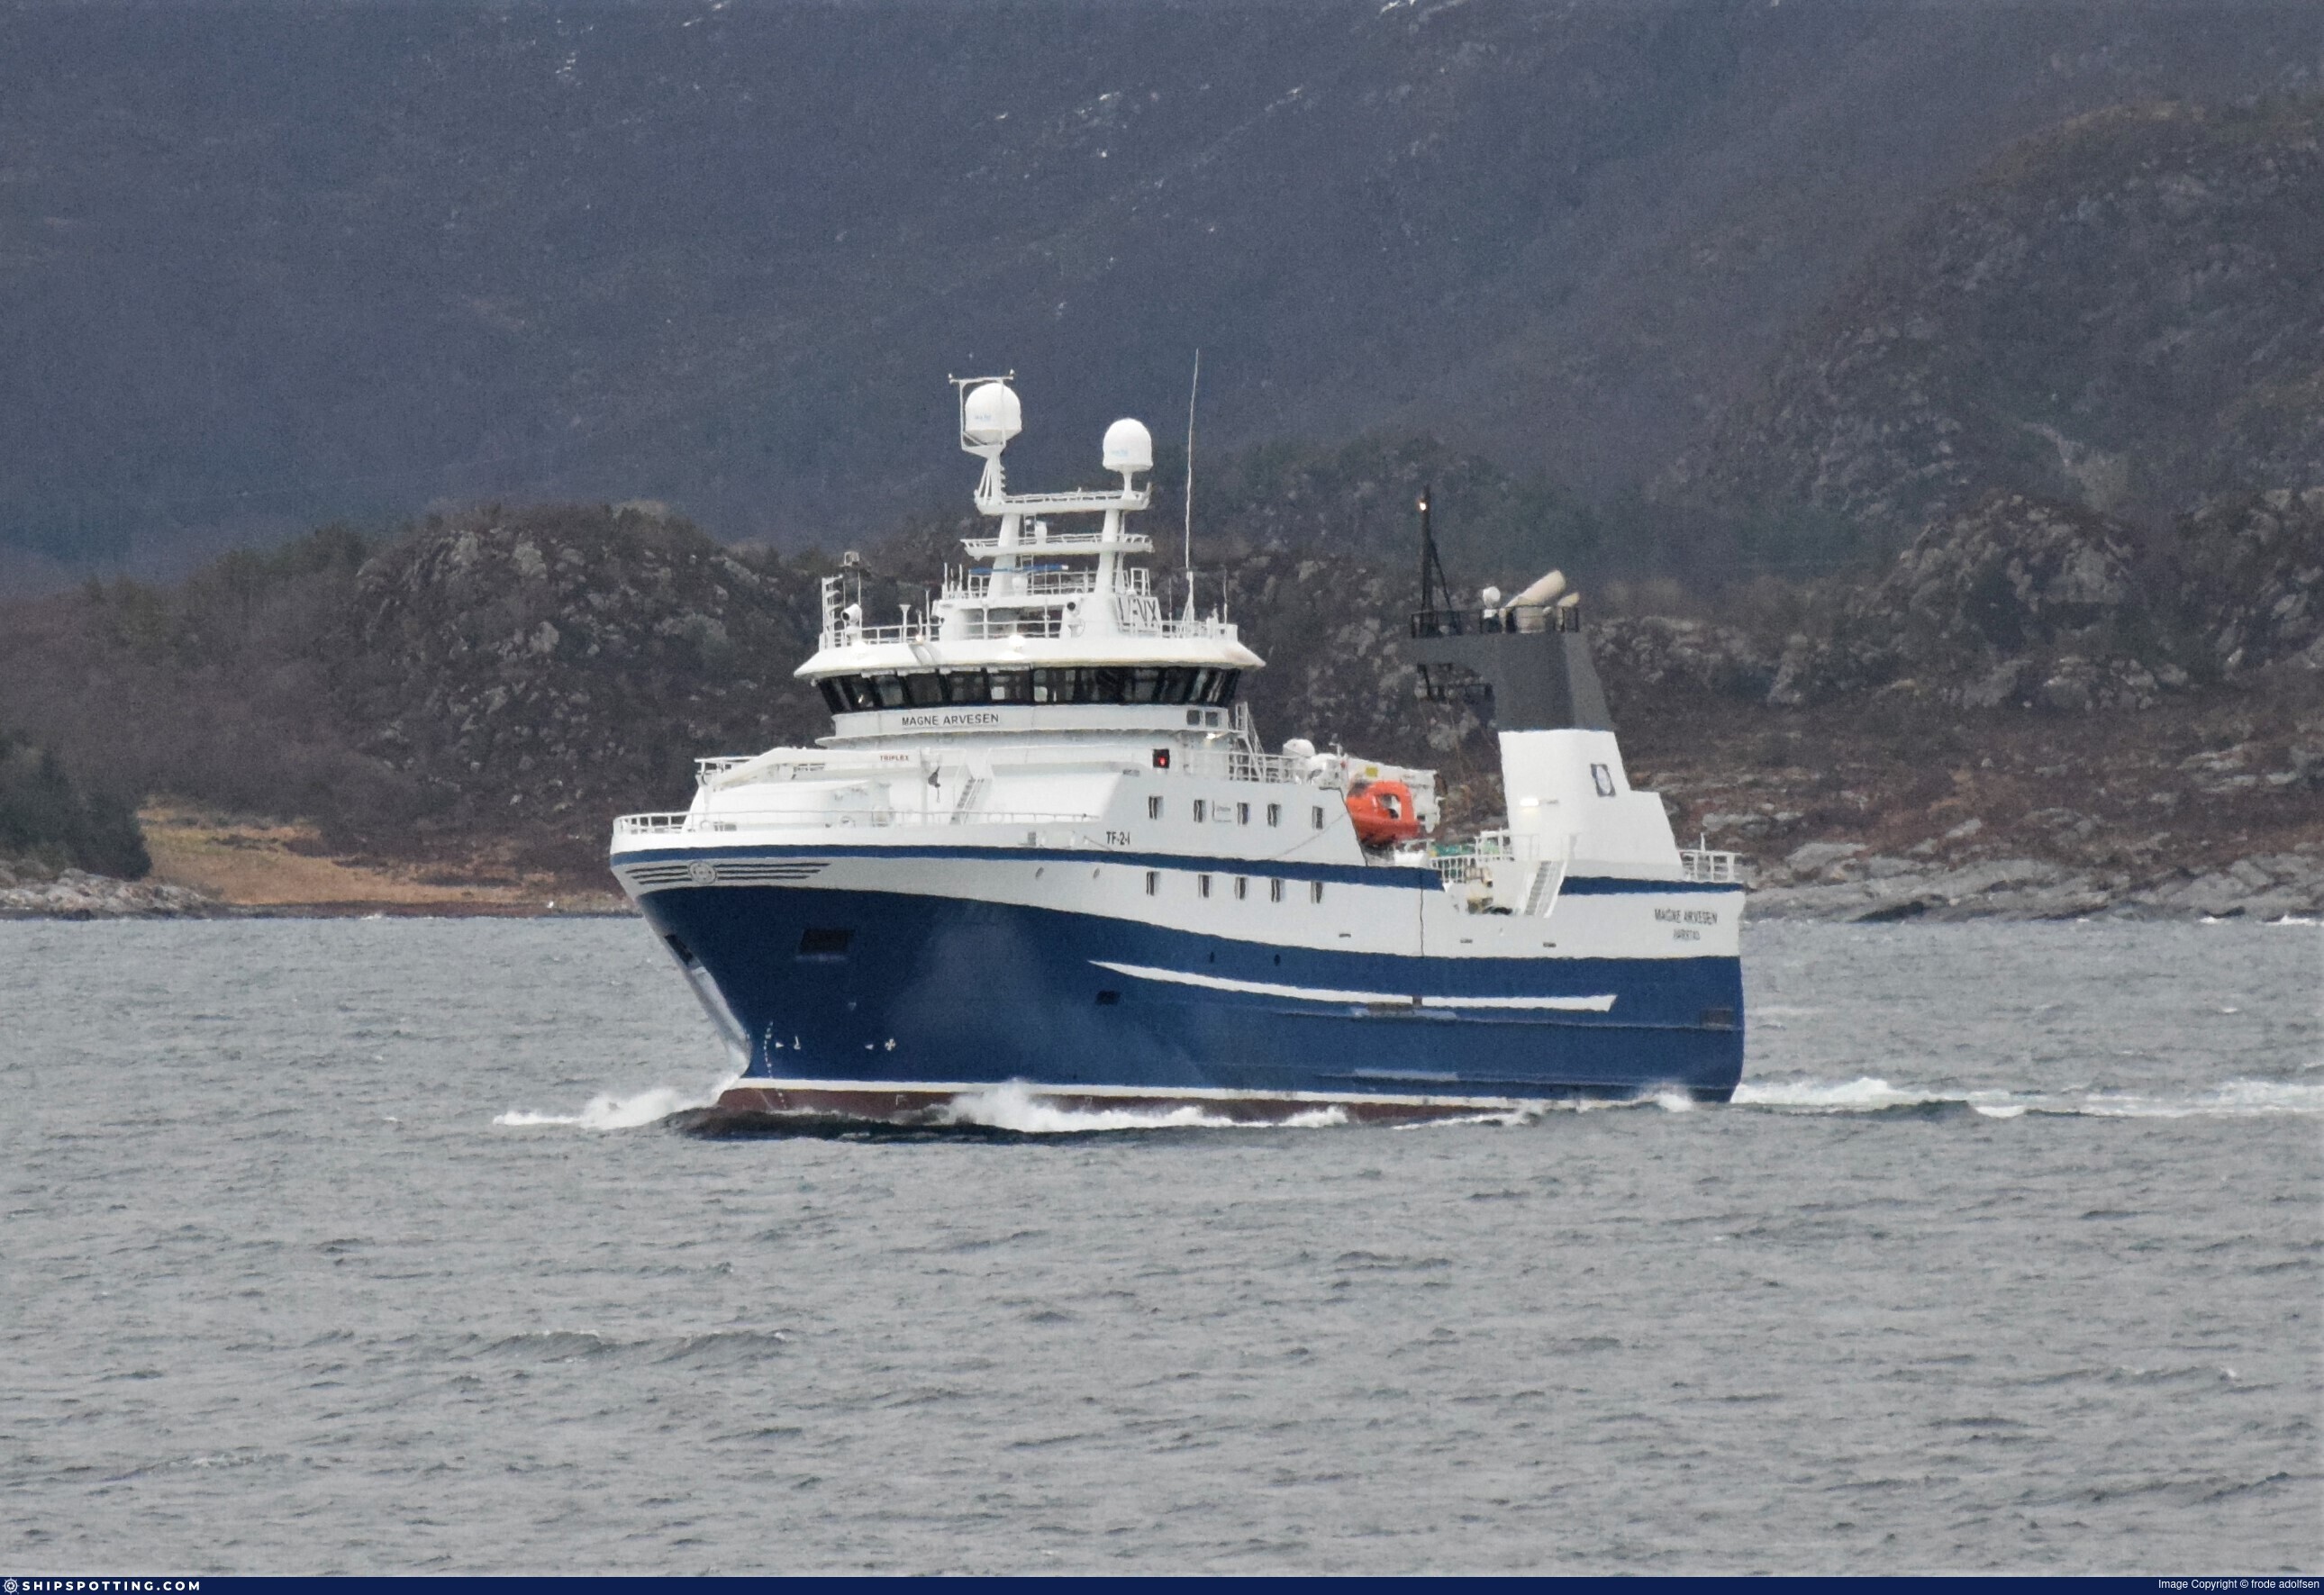 Magne Arvesen - IMO 9876593 - ShipSpotting.com - Ship Photos, Information,  Videos and Ship Tracker